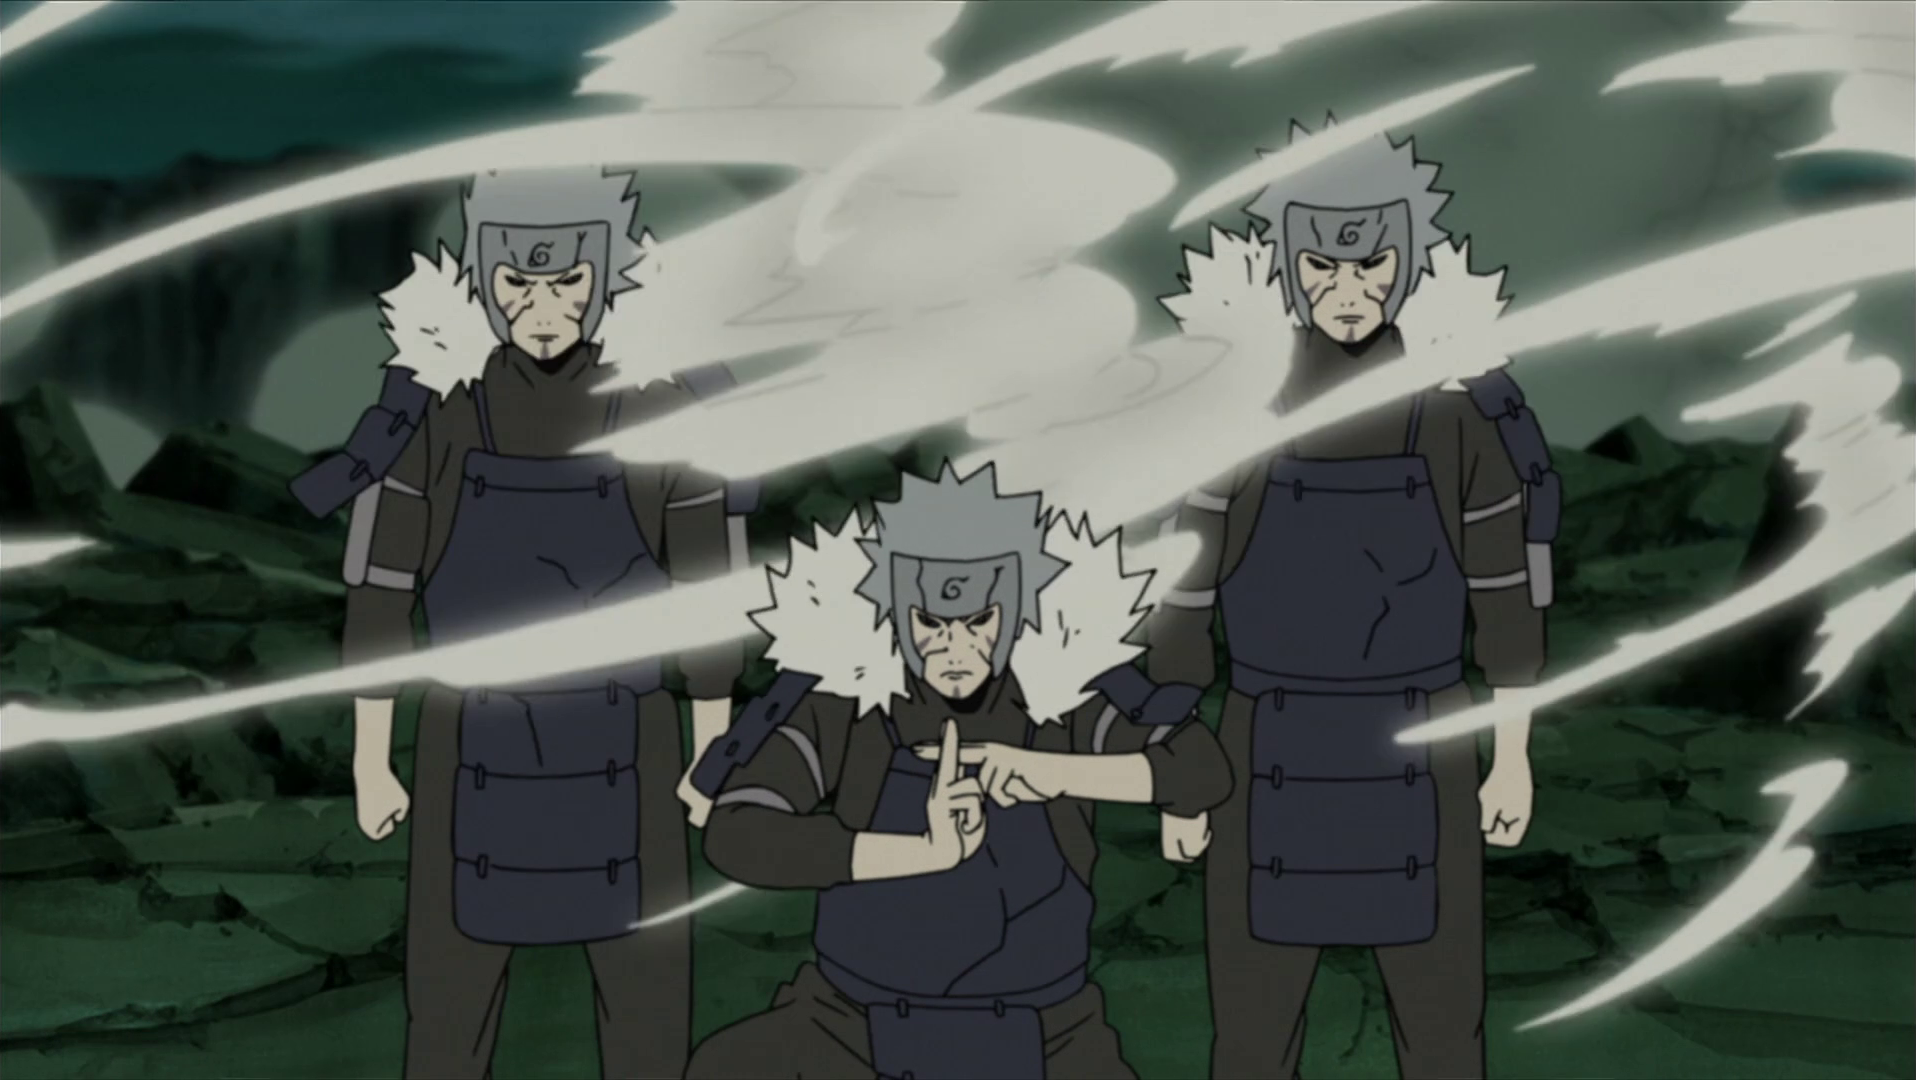 Naruto: 10 Most Powerful Ninjutsu Attacks